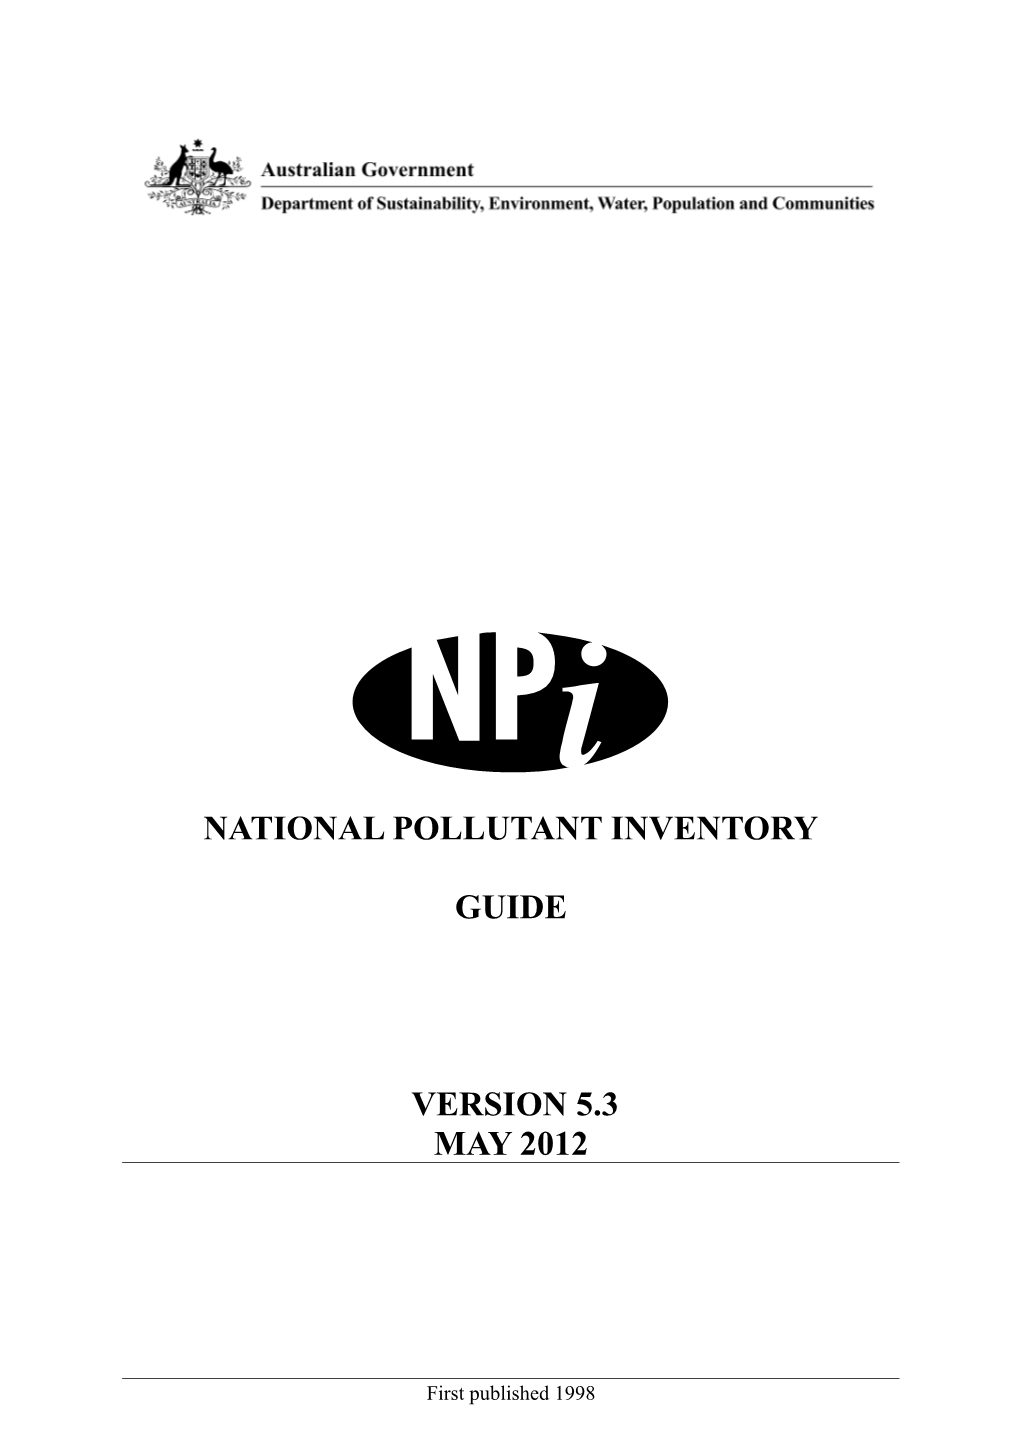 The NPI Guide Version 5.2